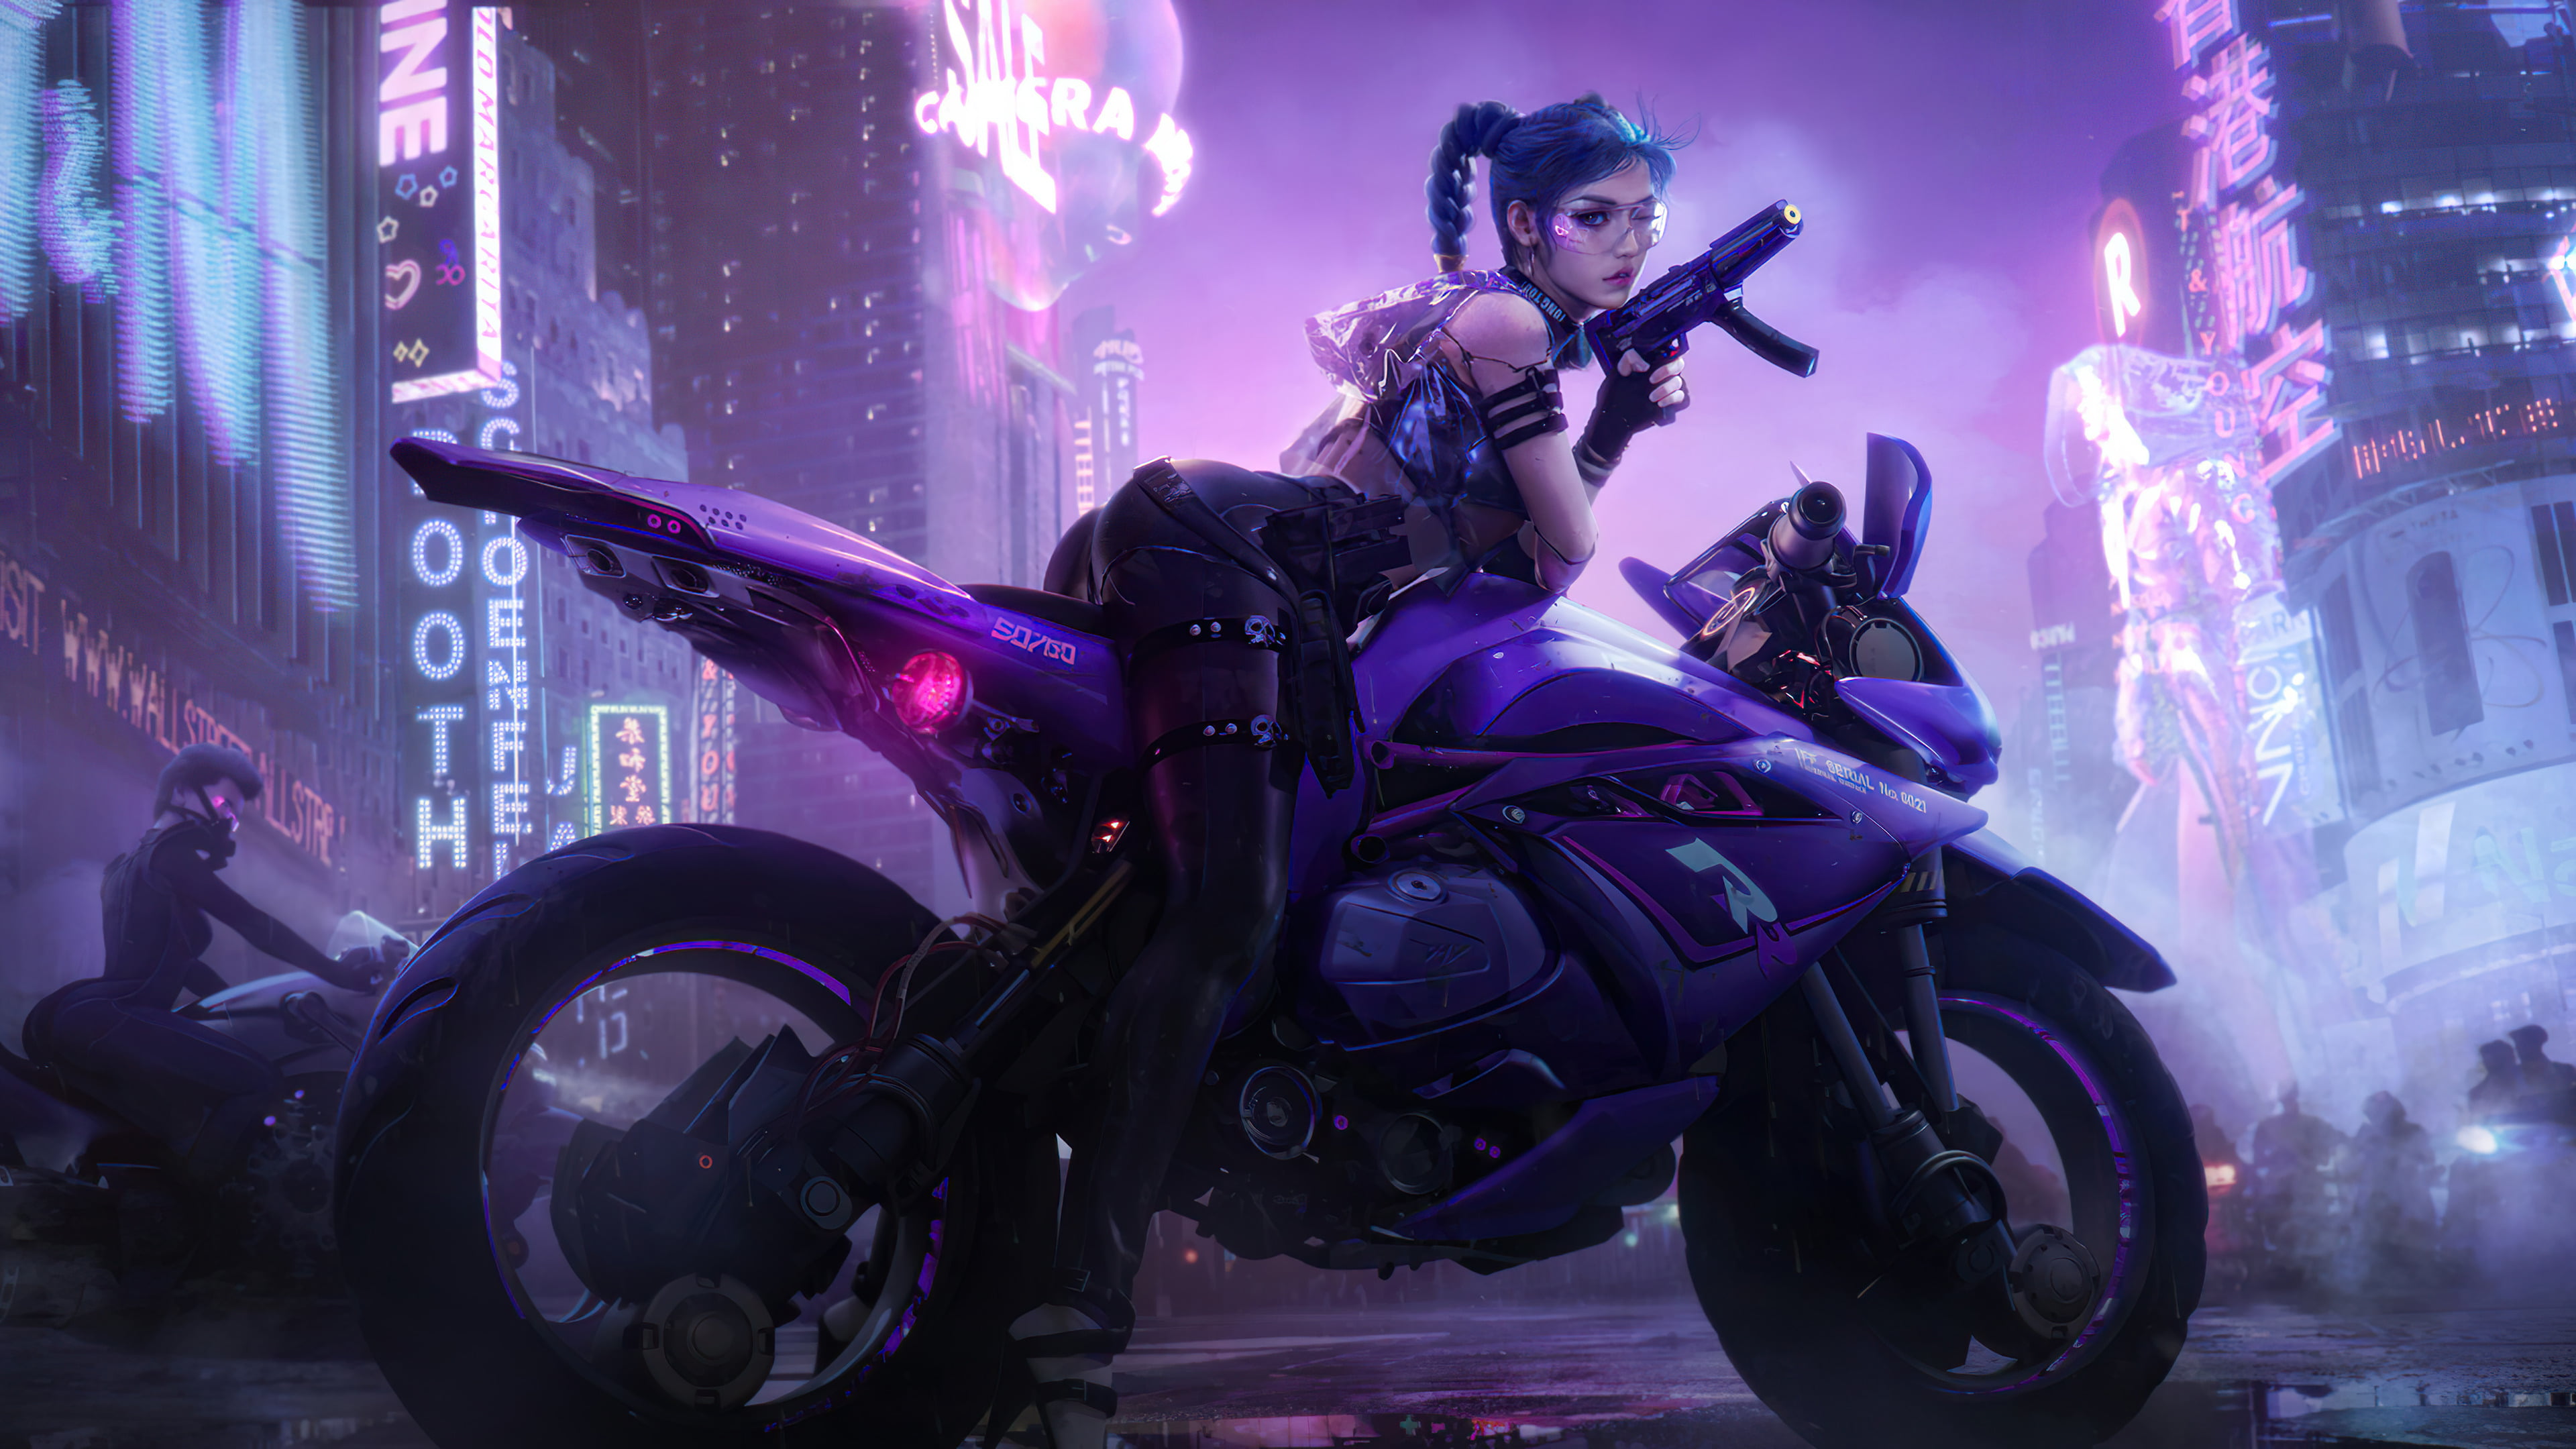 Biker girl, cyberpunk, Girl With Weapon